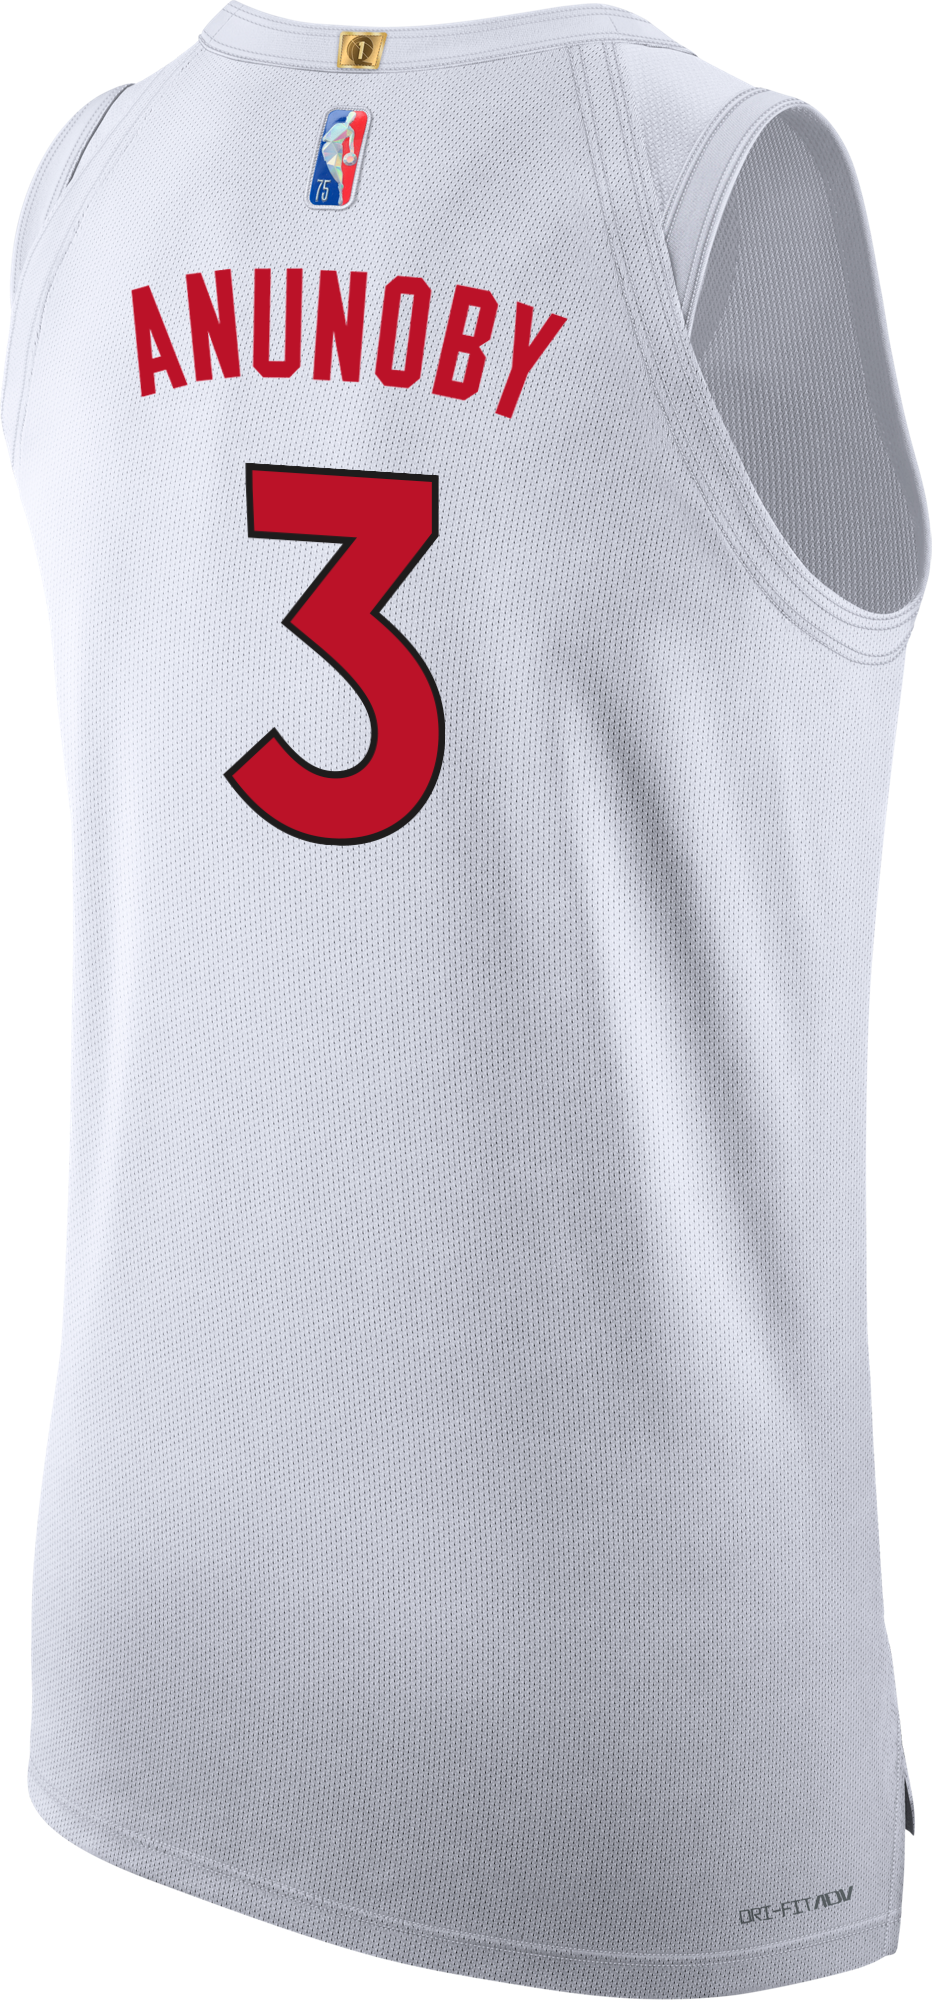 Toronto Raptors Nike Earned Edition Swingman Jersey - OG Anunoby - Mens